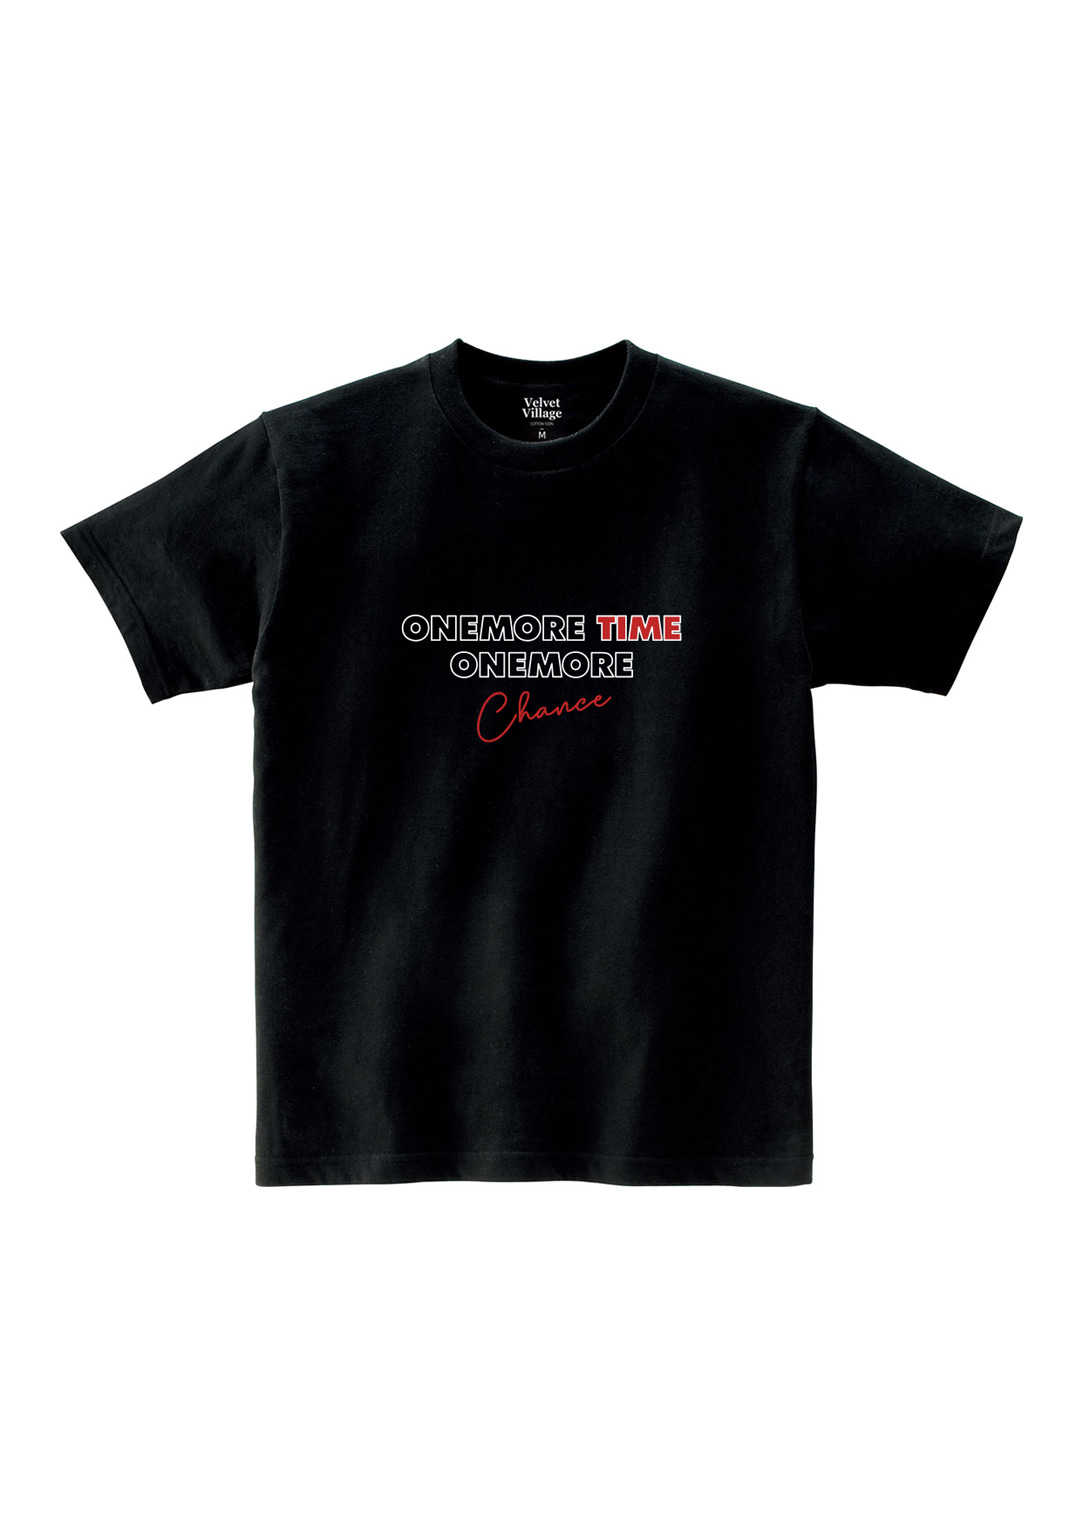 Onemorechance T-shirt (Black)